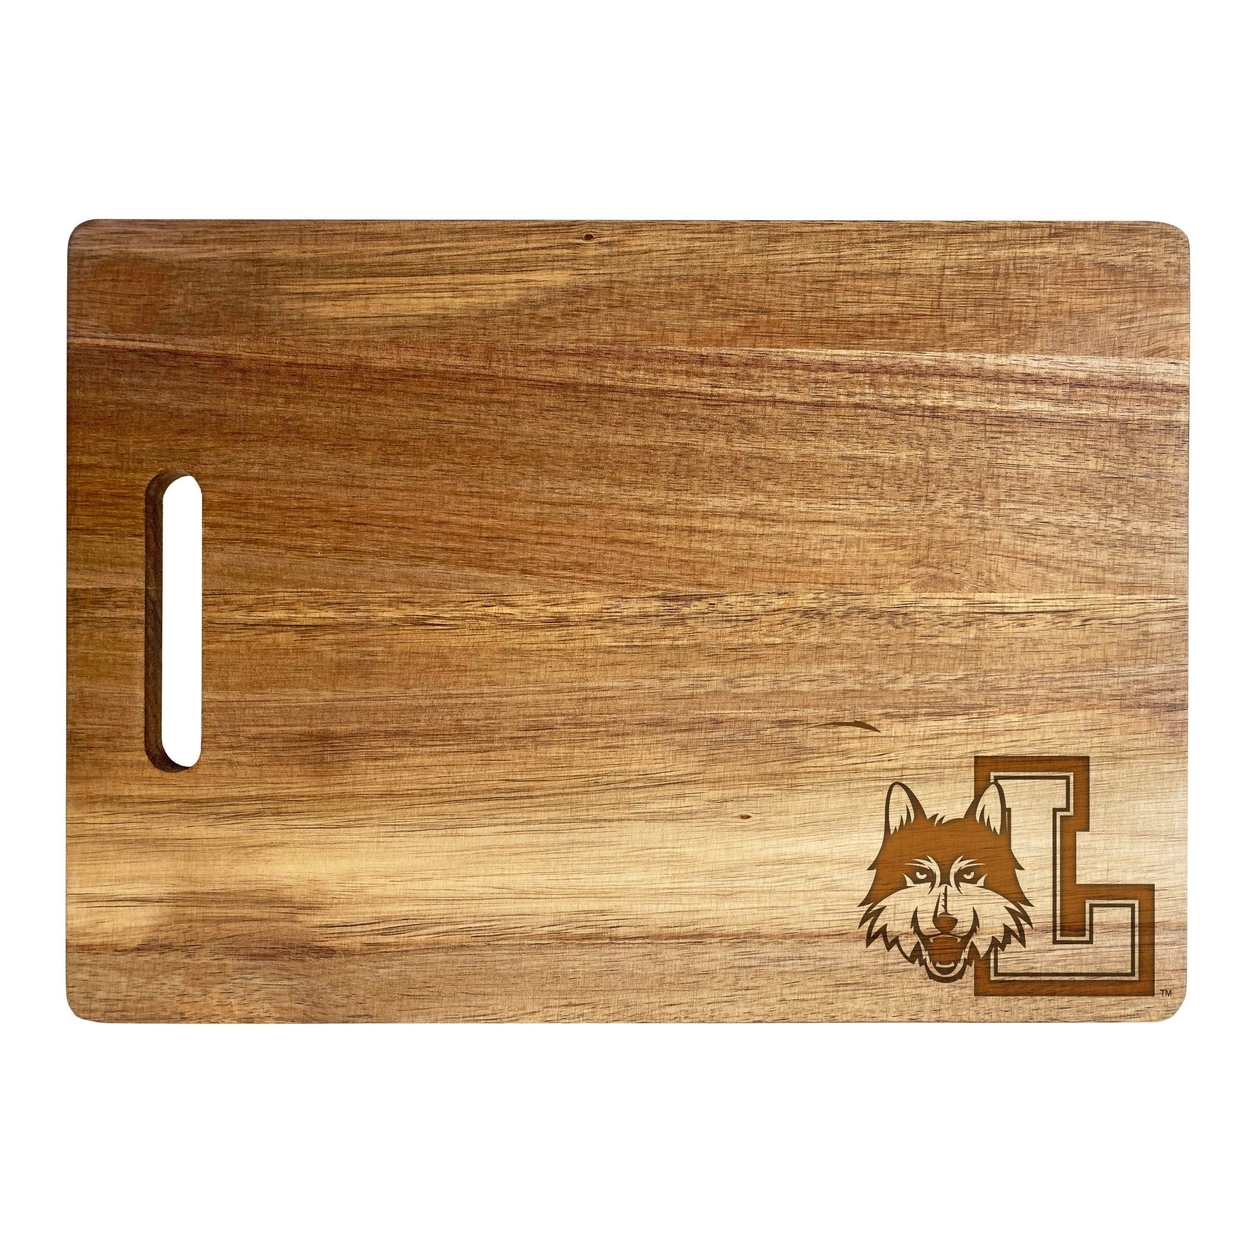 Loyola University Ramblers Engraved Wooden Cutting Board 10 X 14 Acacia Wood - Small Engraving